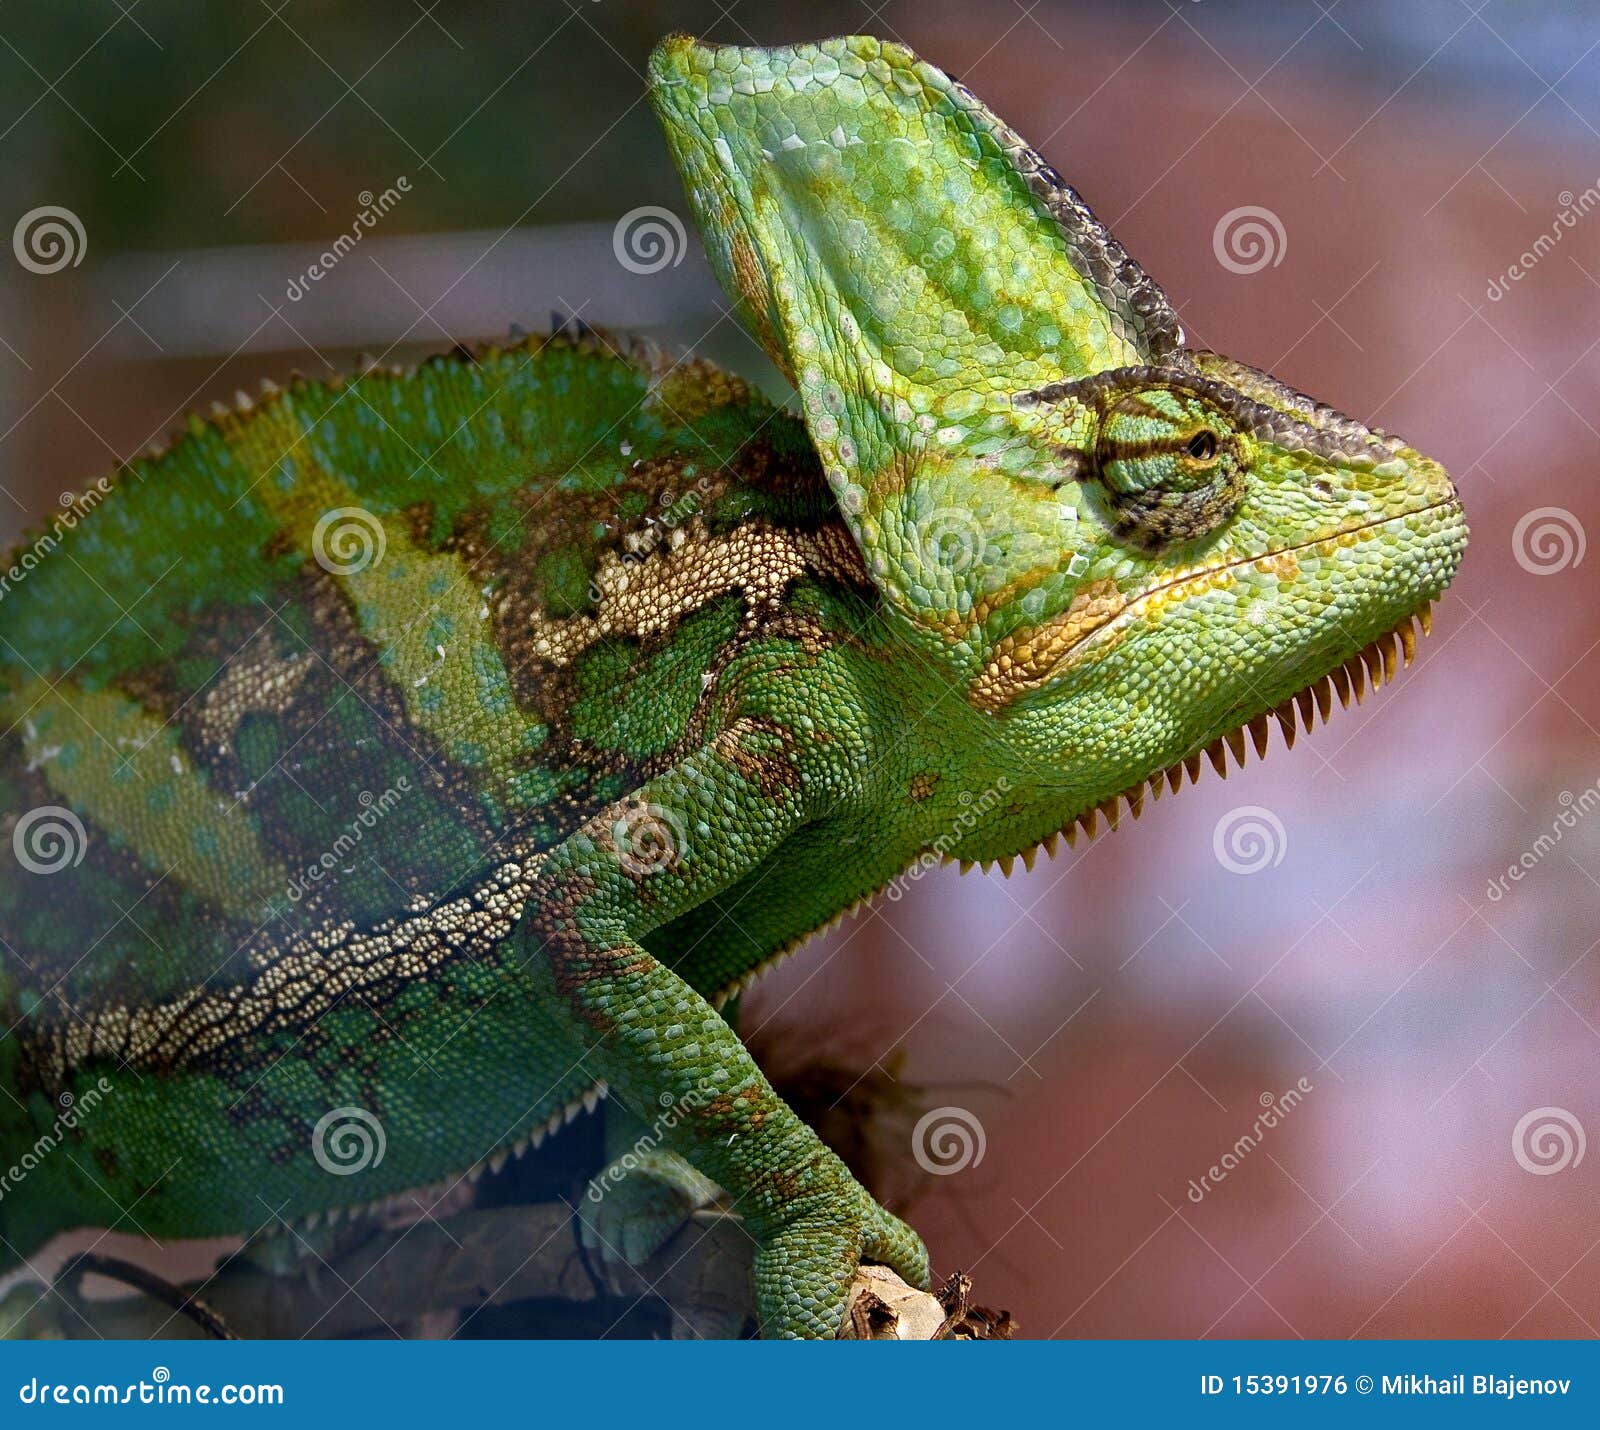 Chameleon 14 stock photo. Image of tongue, chameleon ...